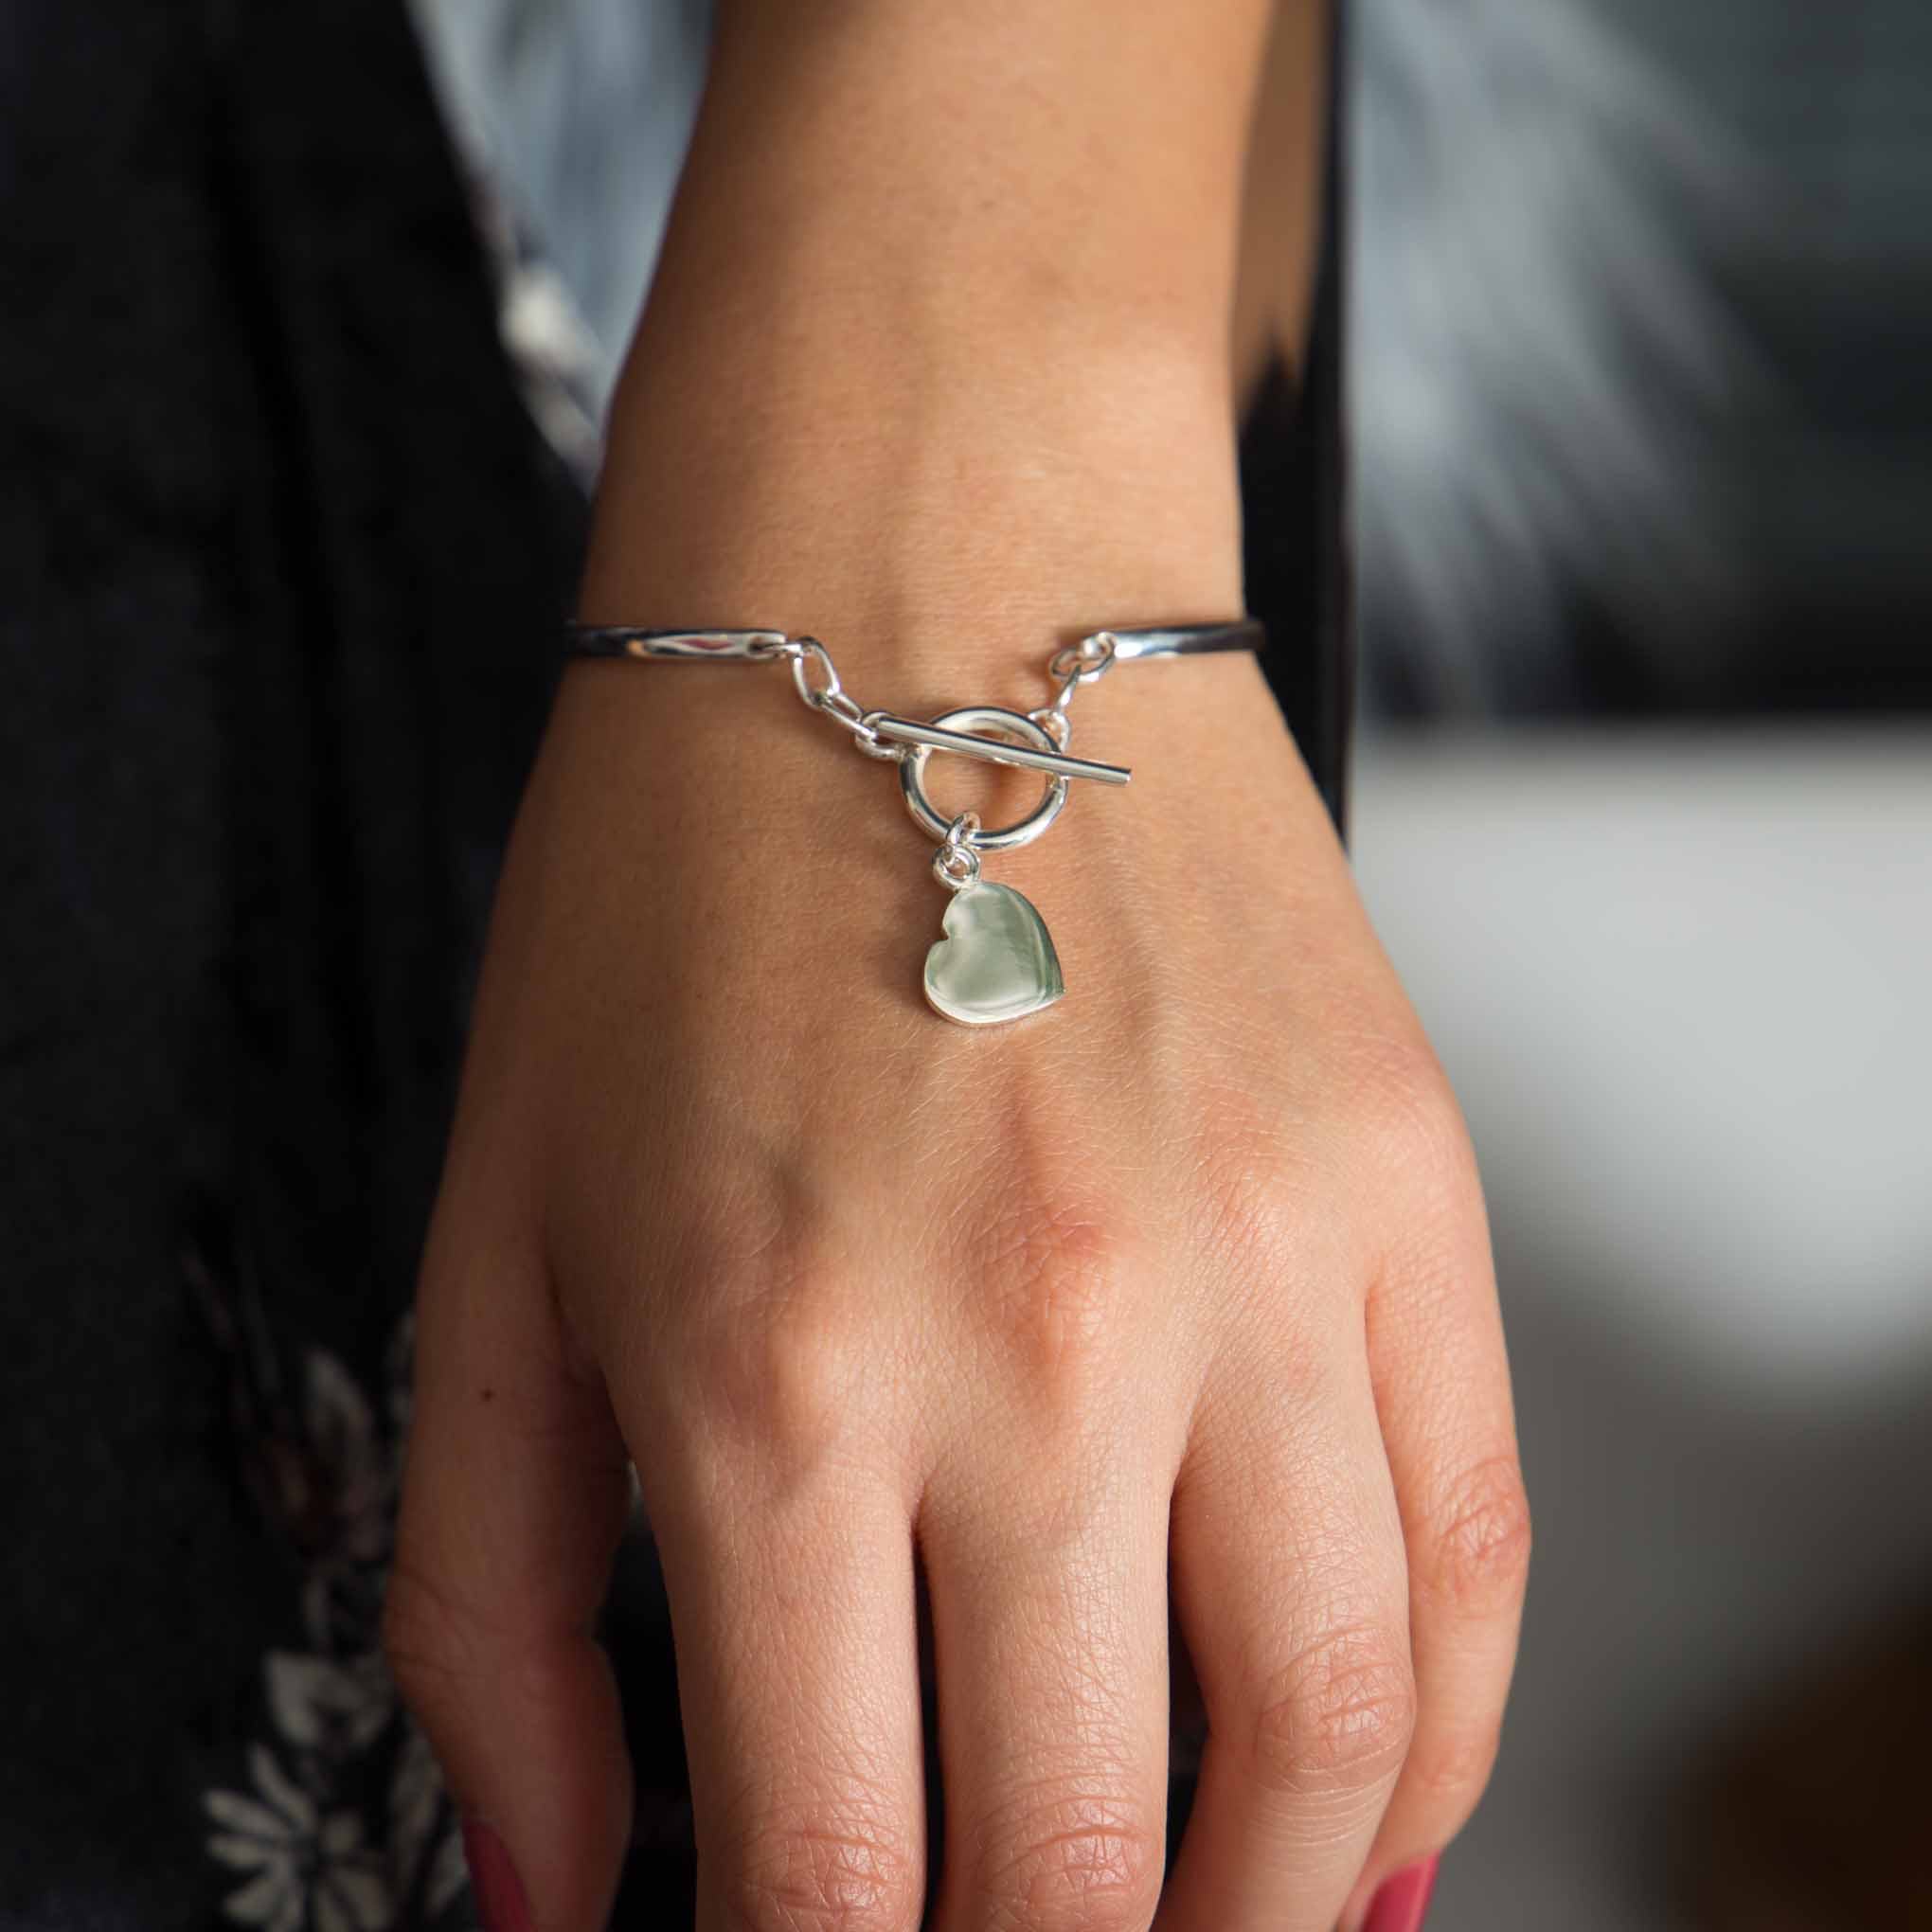 Silver bracelet with pendant heart